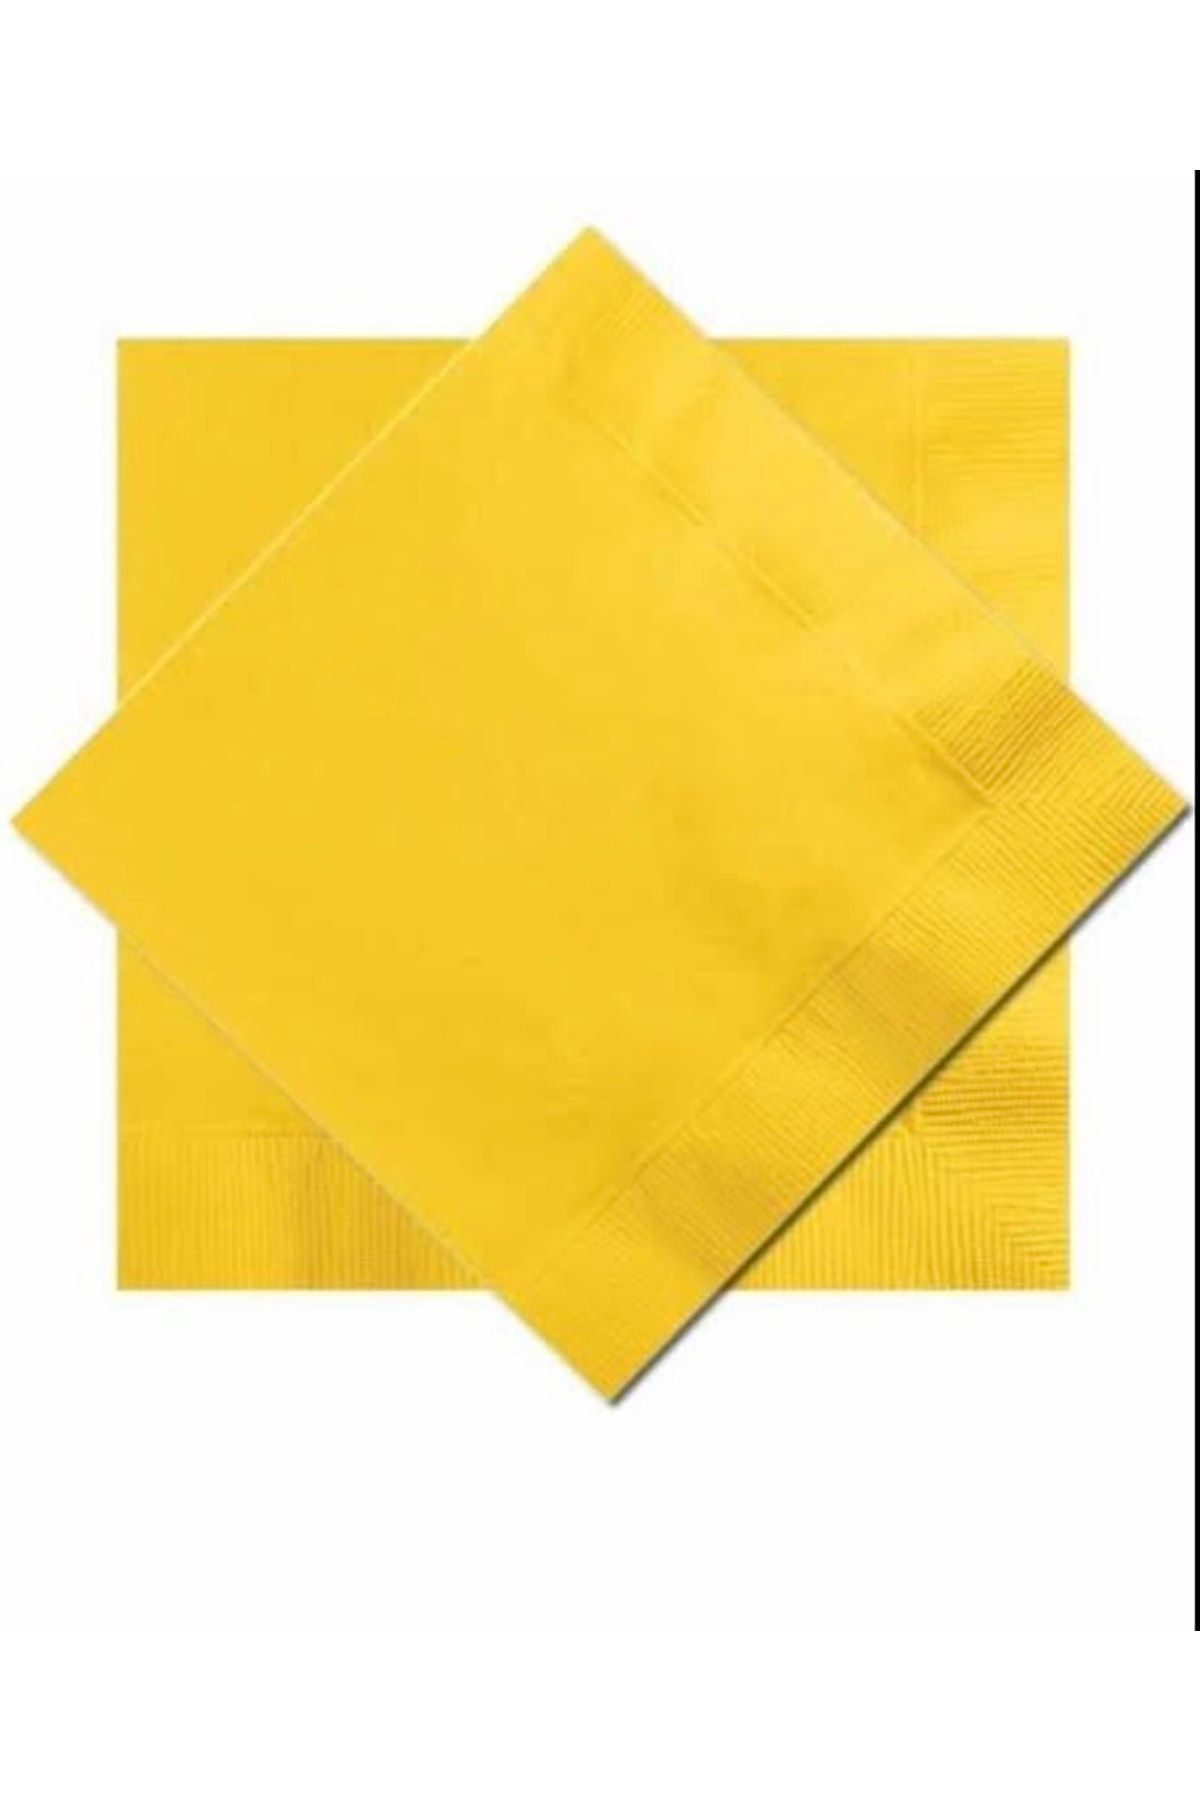 Deniz Party Store Sarı Kağıt Peçete 16 Adet